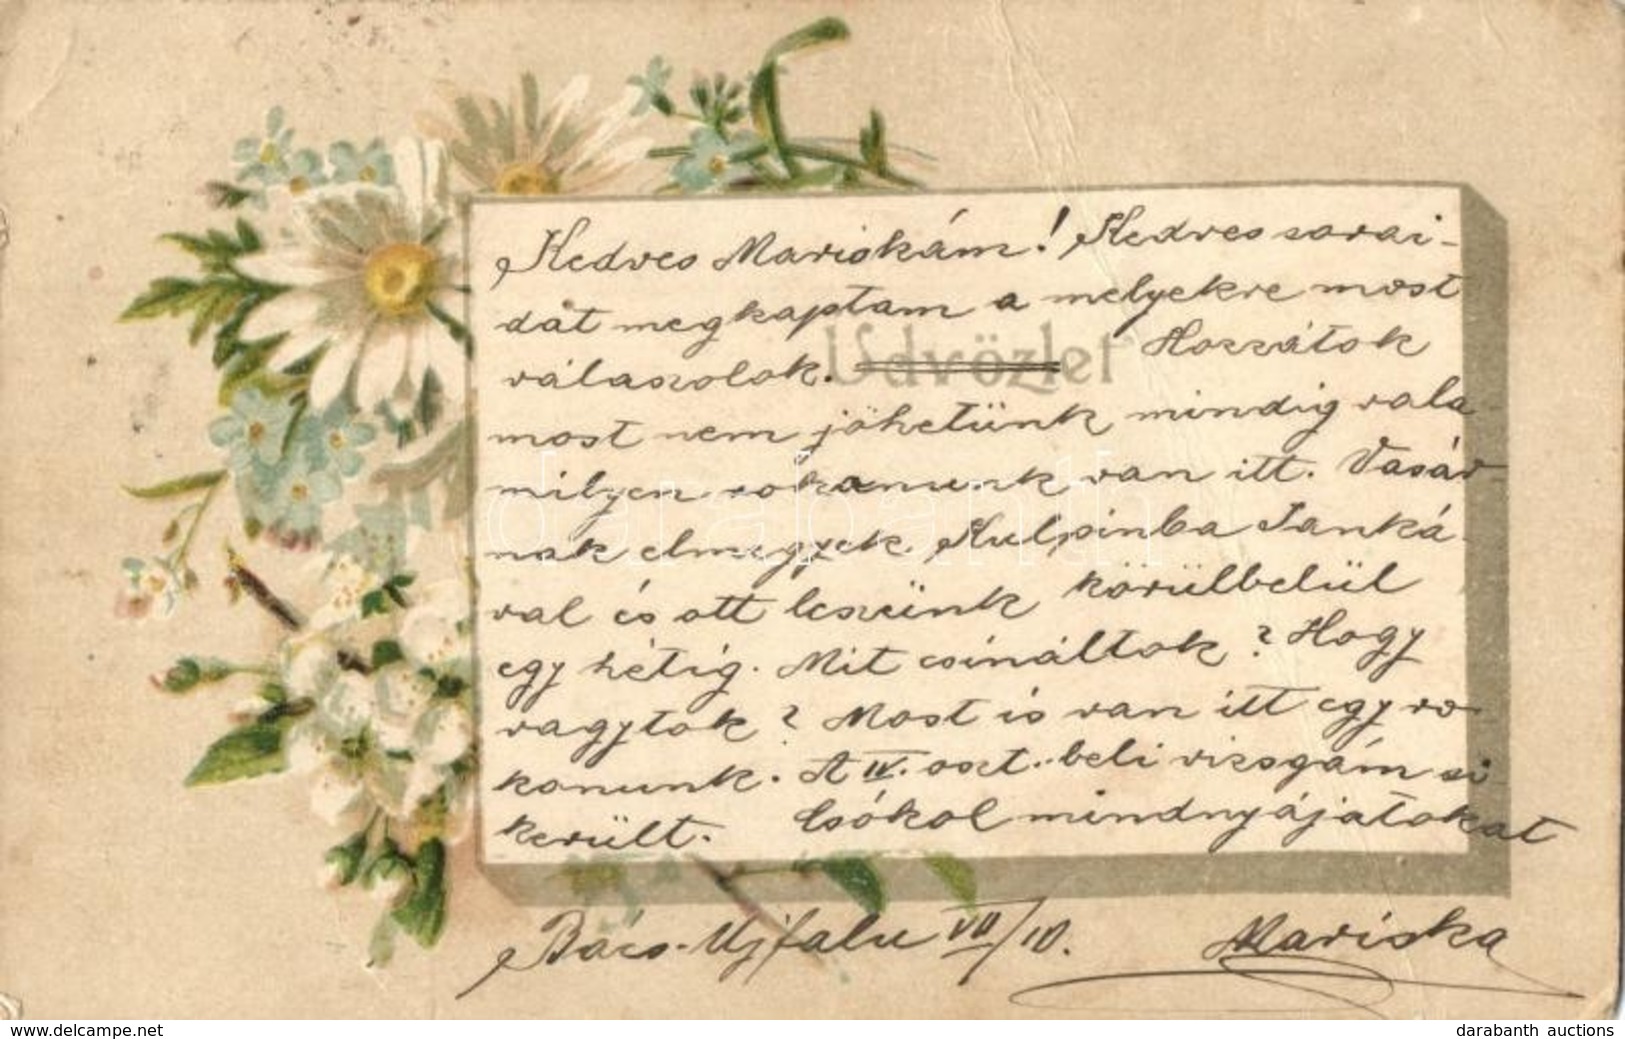 T2/T3 1901 Floral Litho Greeting Card (EK) - Ohne Zuordnung